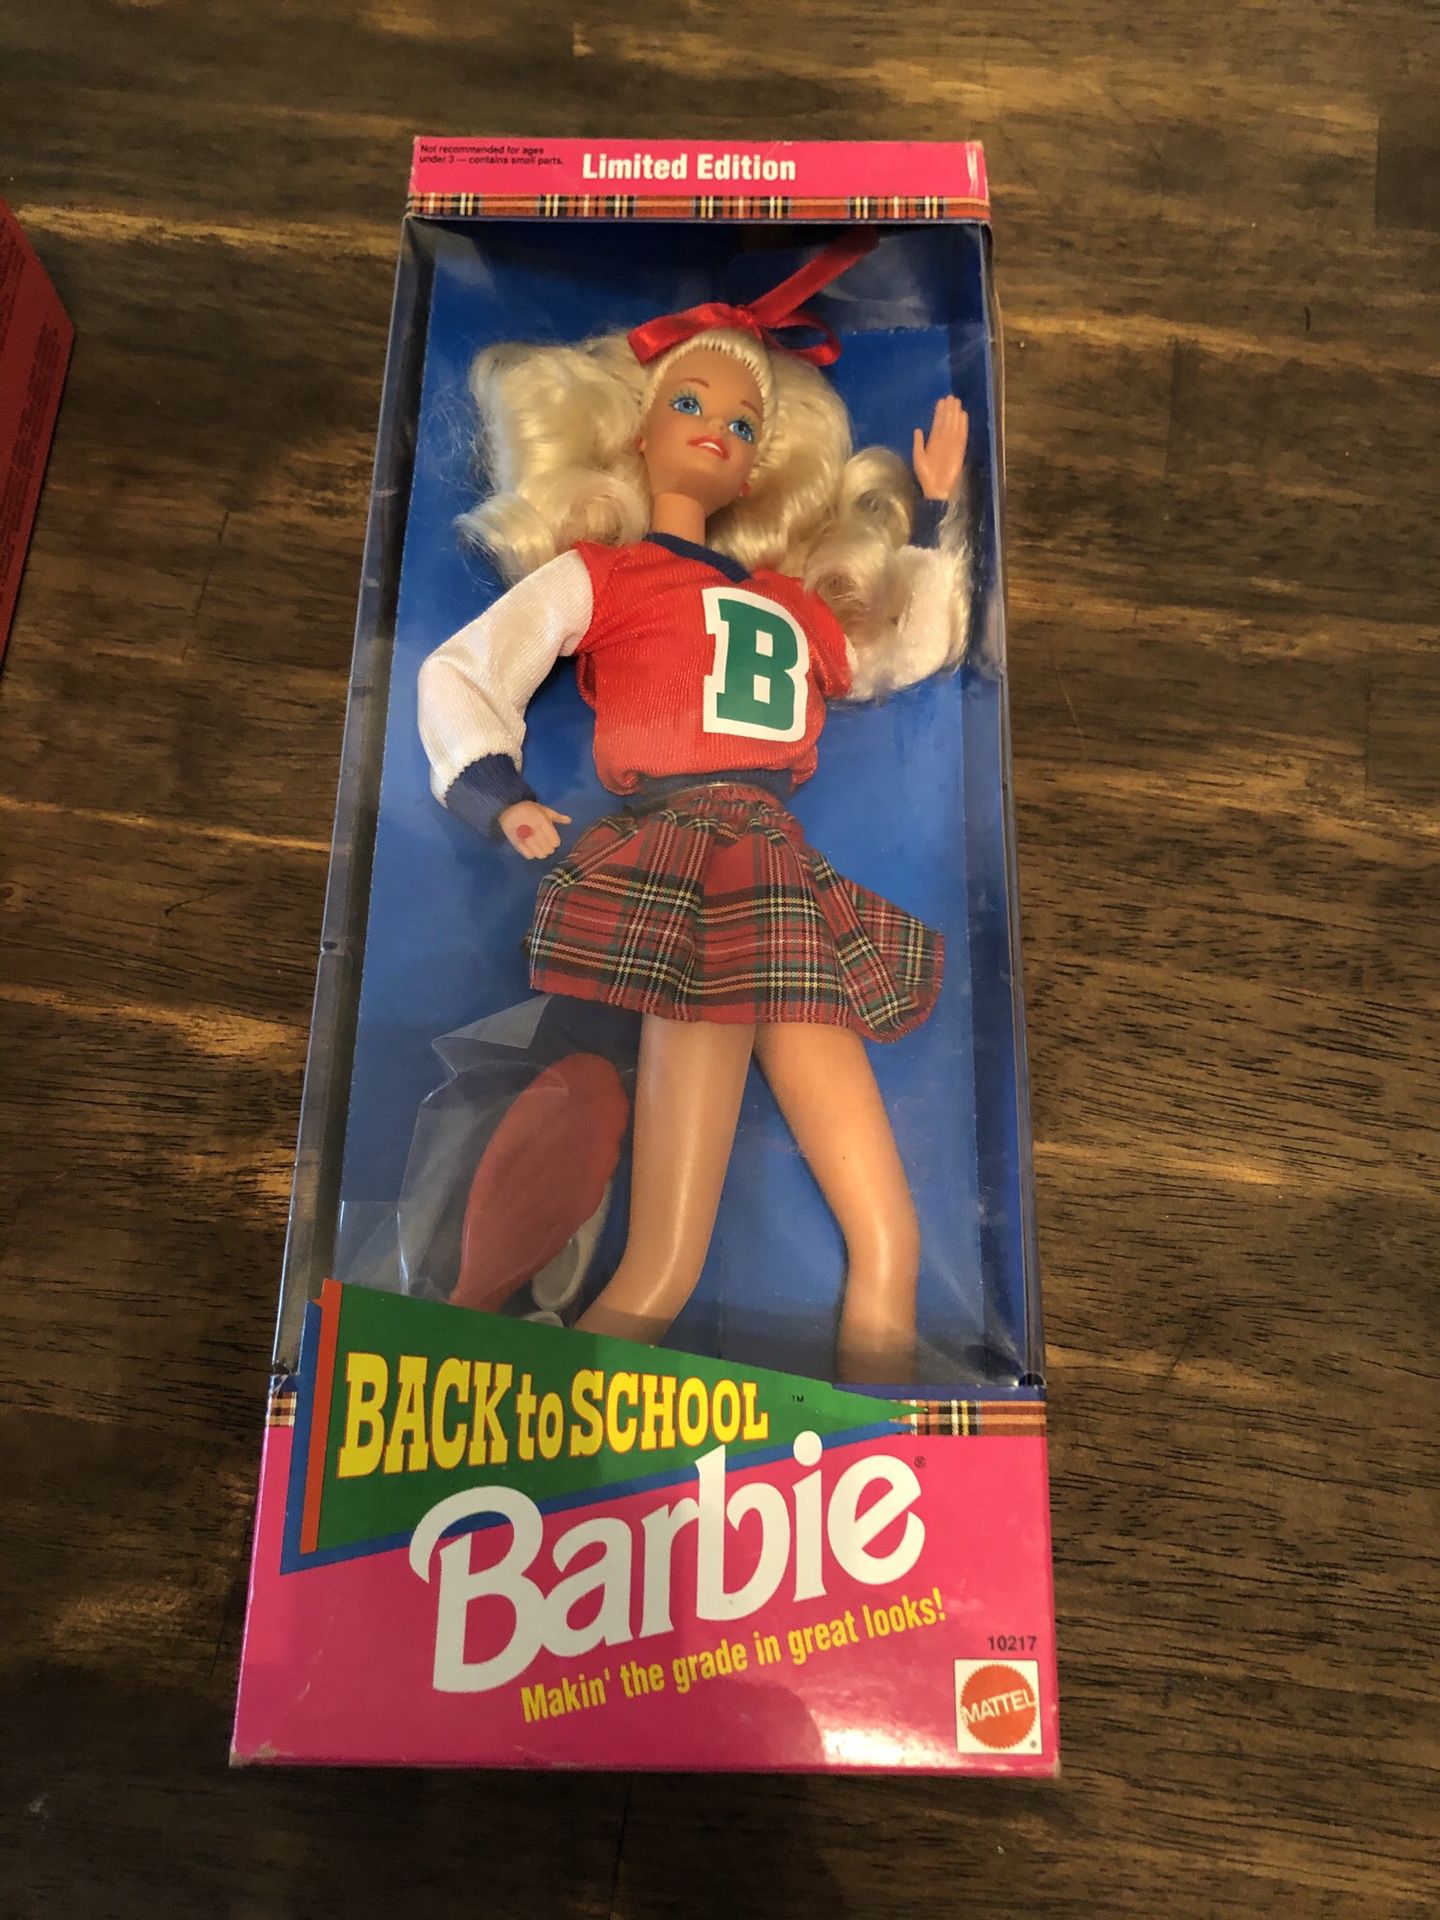 Back to School Barbie